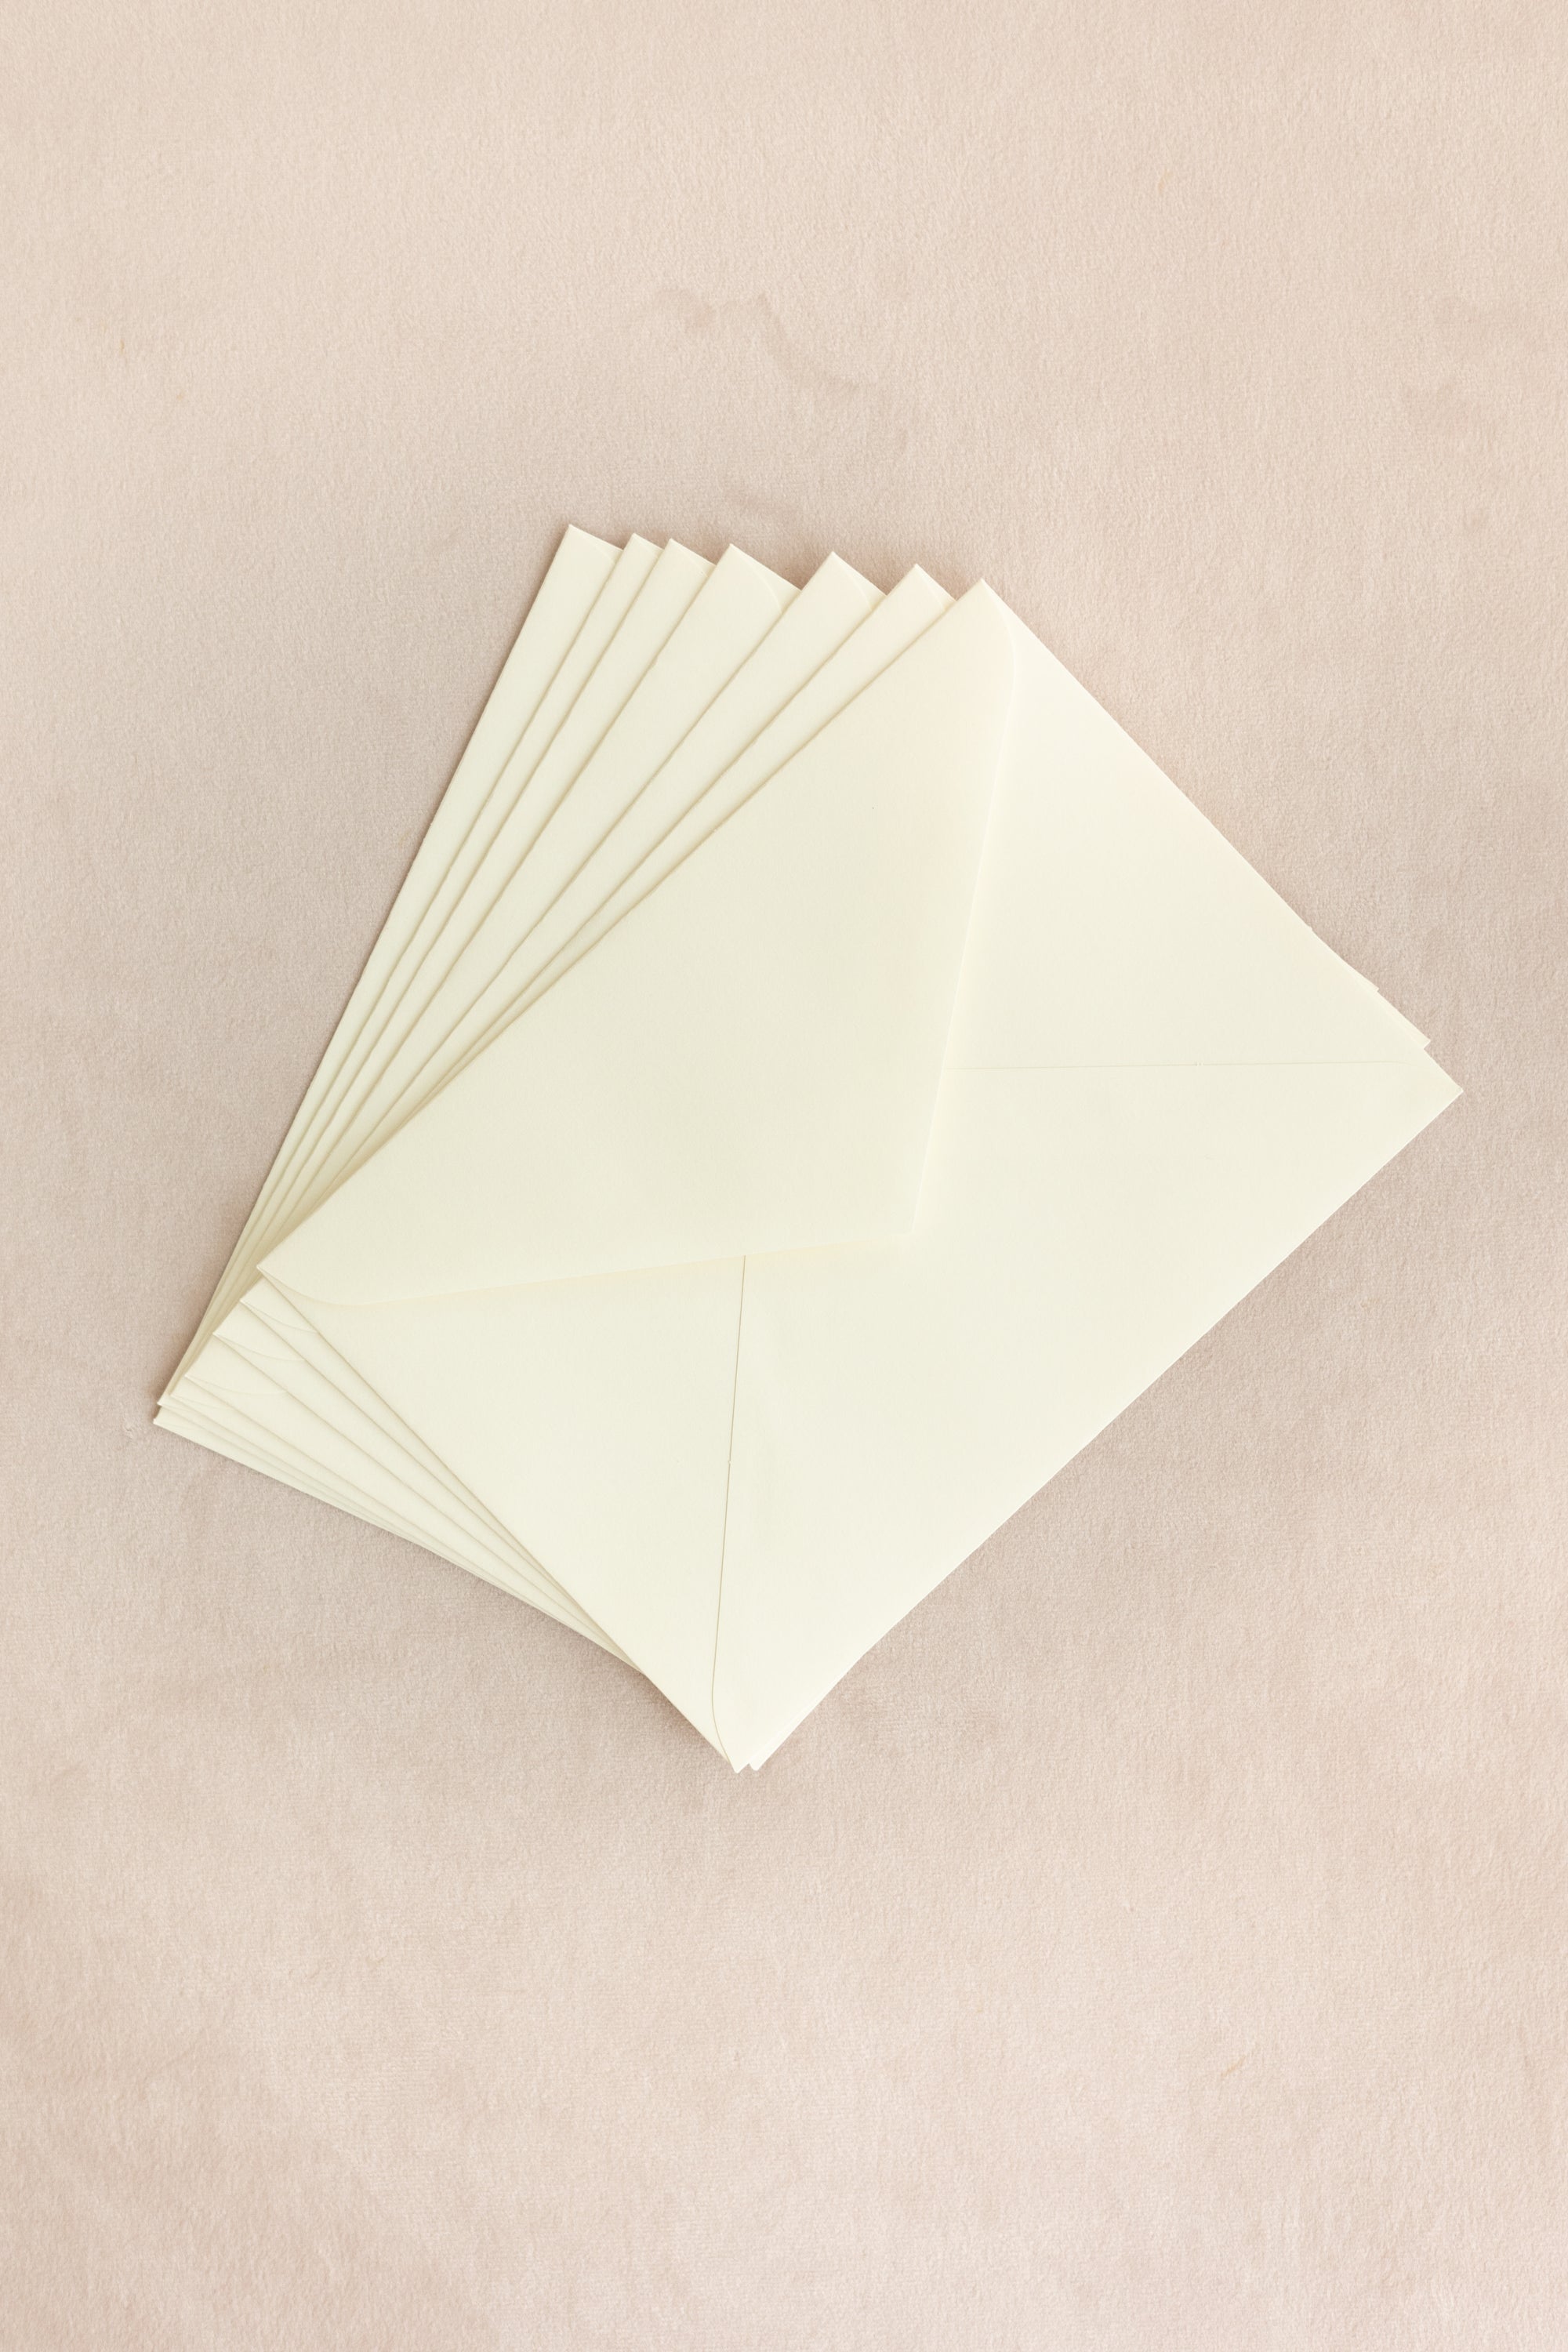 Silk Velvet Greeting Card【Oval】Leaf